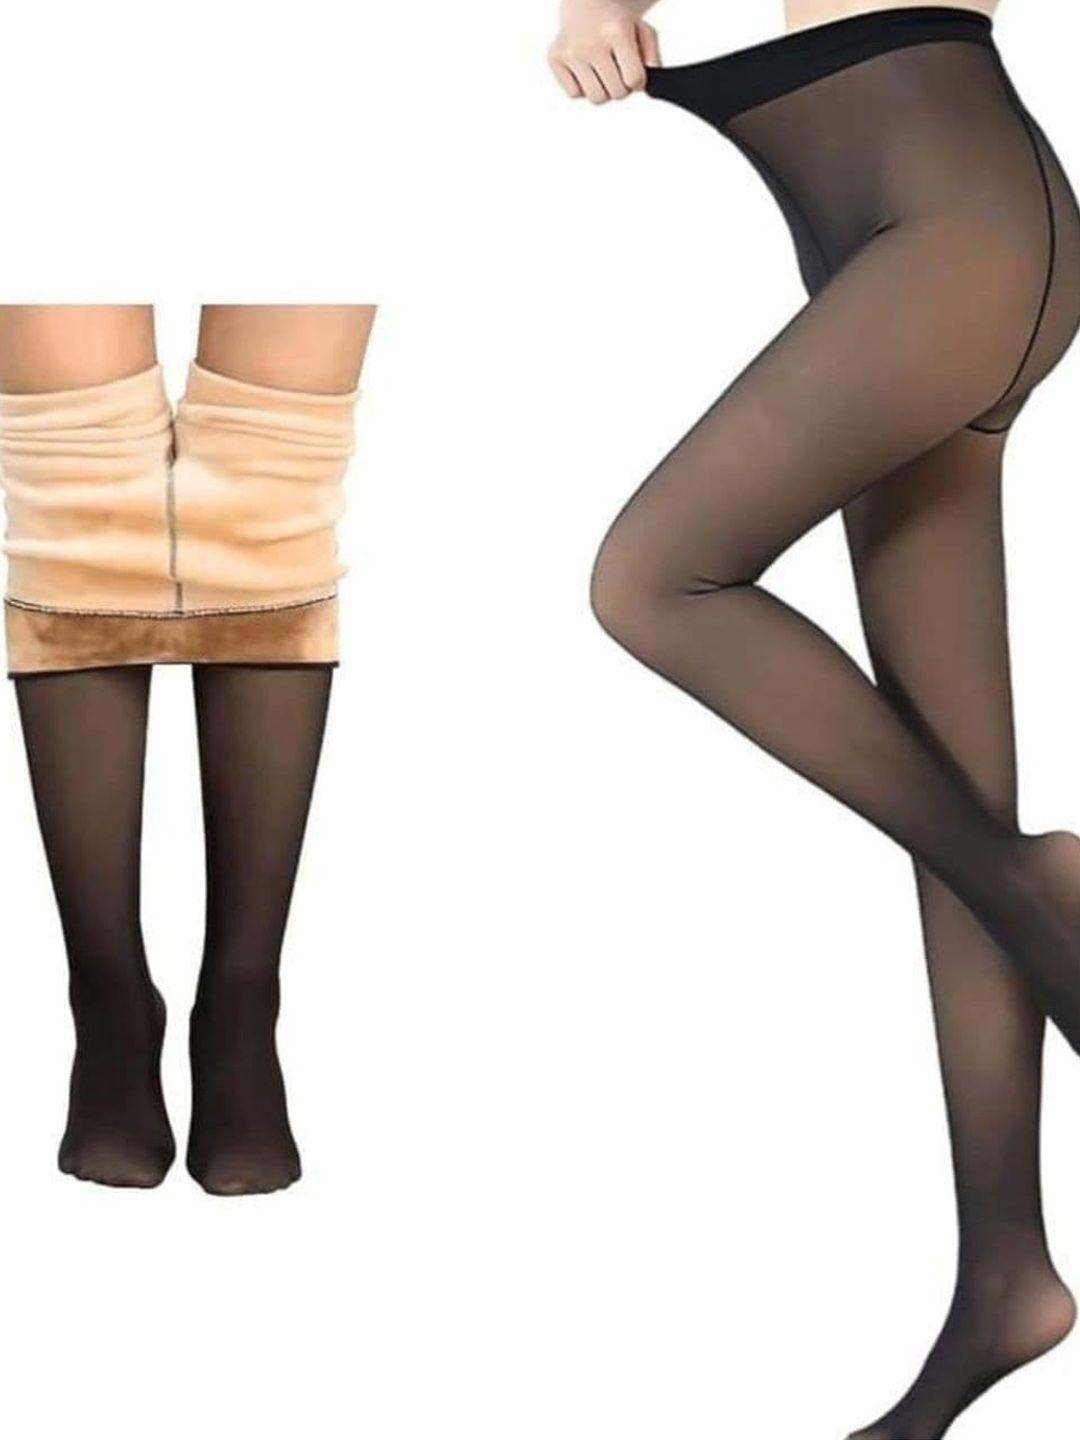 secrets by zerokaata fur-lined pantyhose stockings